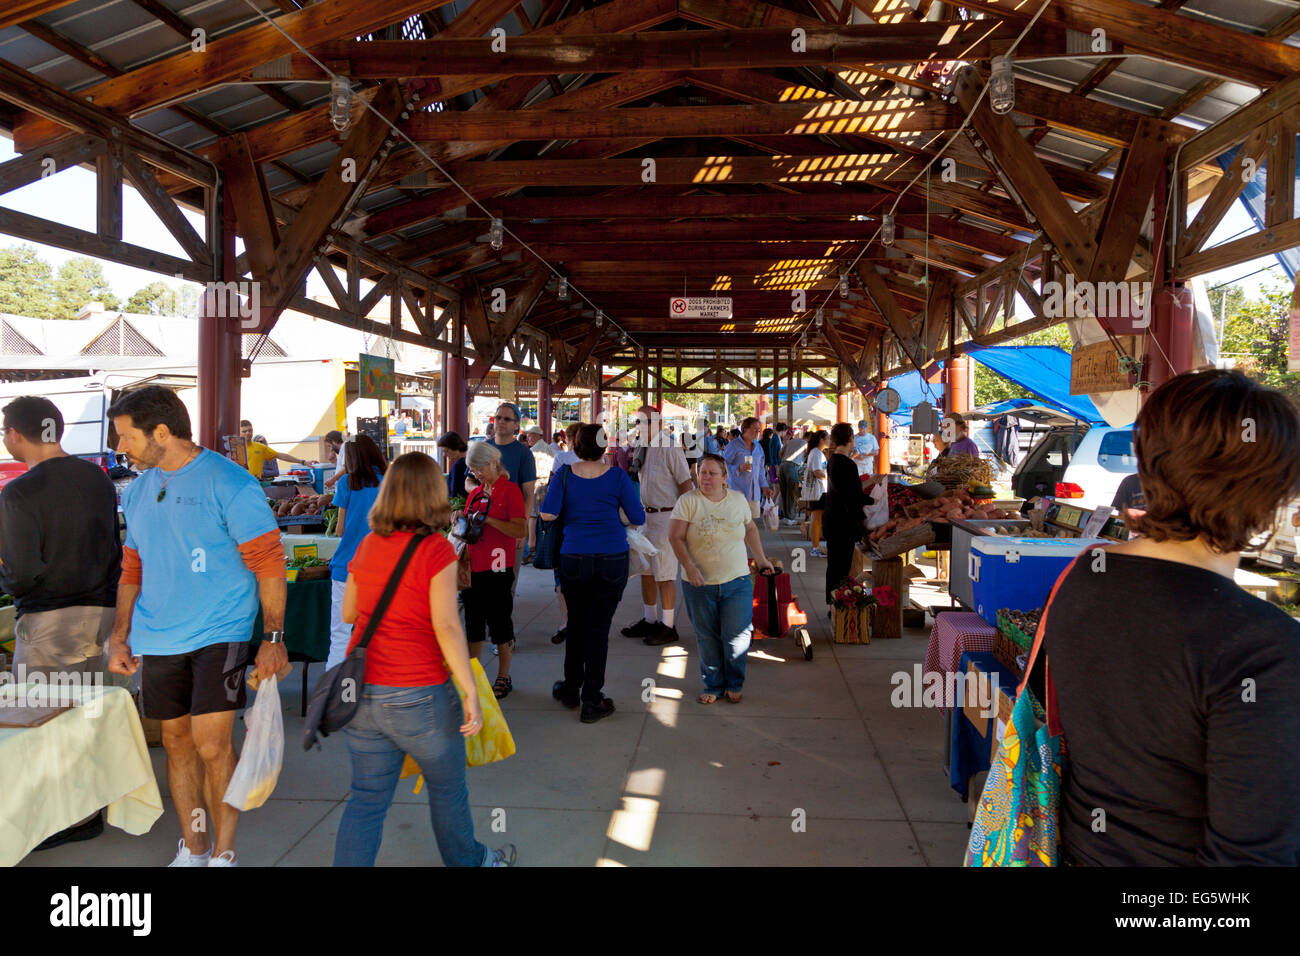 Crowds at the Farmers Market Chapel Hill North Carolina Stock Photo